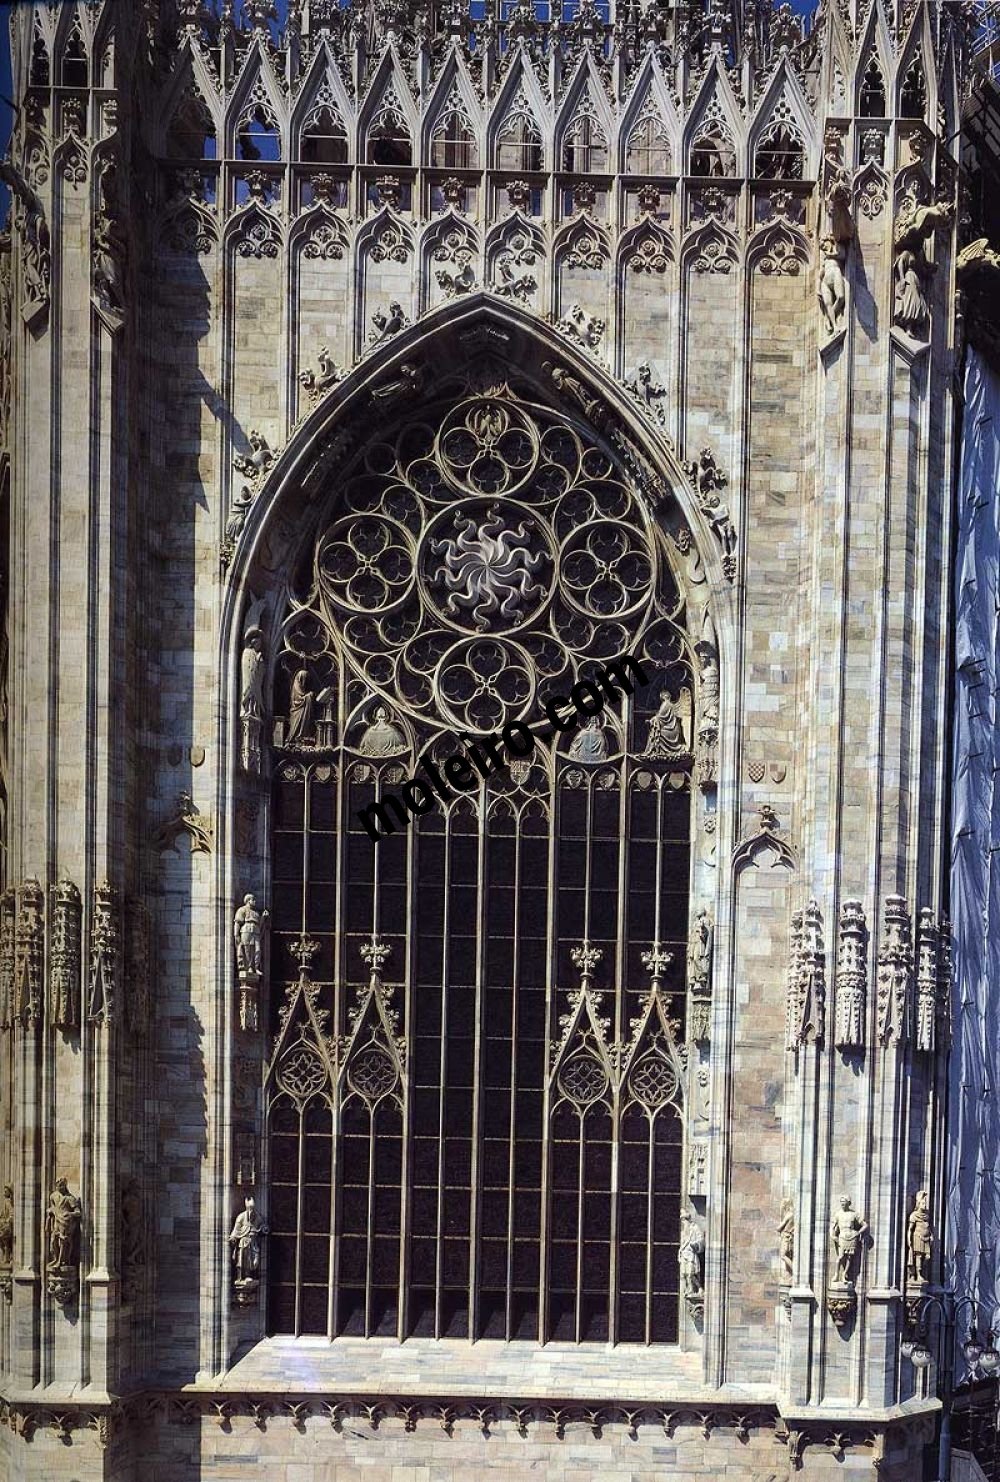 Talleres de Arquitectura en la Edad Media Milan, Italy, Duomo, view of the apse from the eastern side, 14th C.